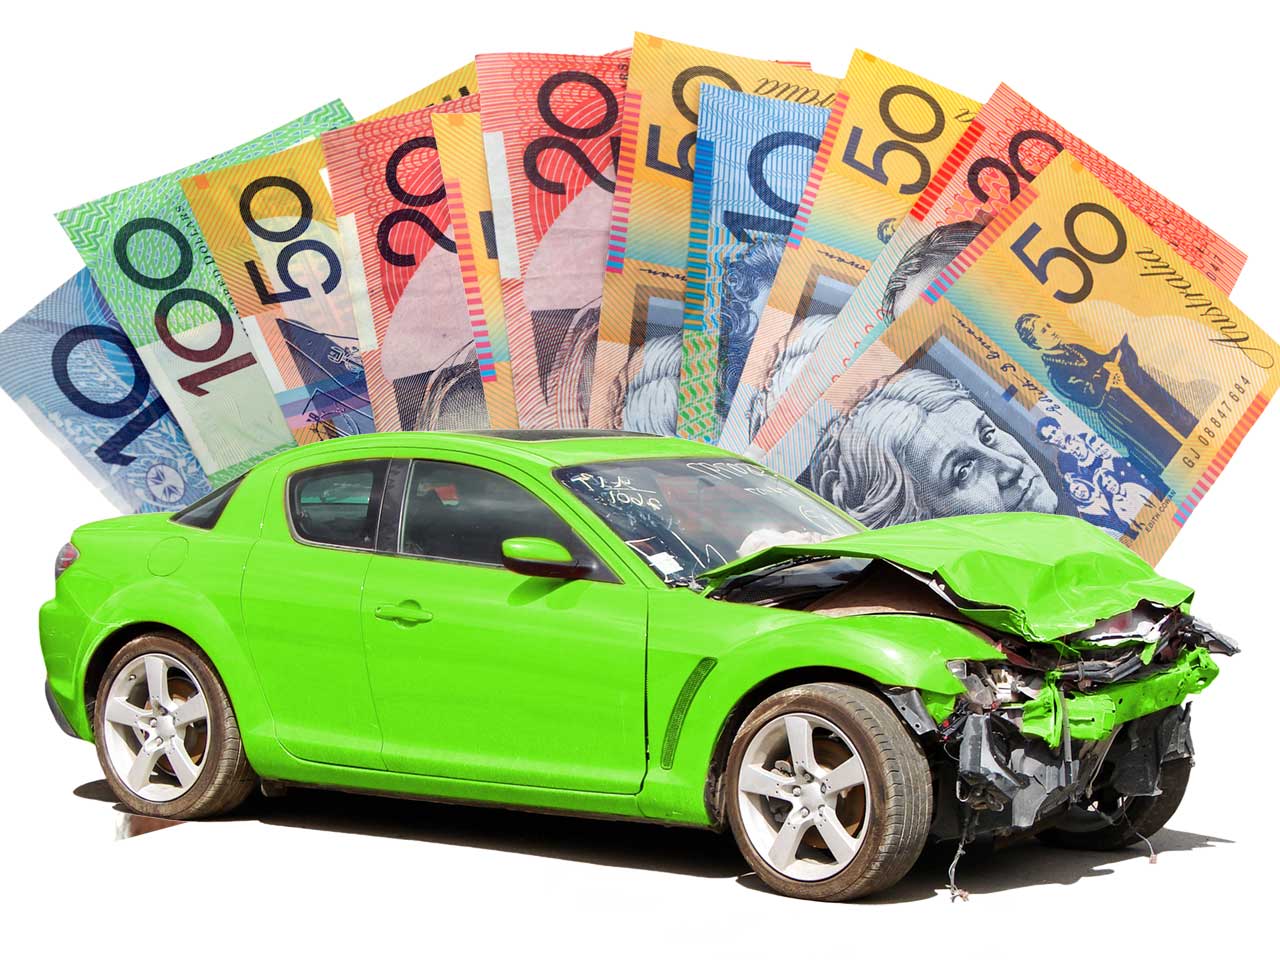 Best Cash for Cars Adelaide